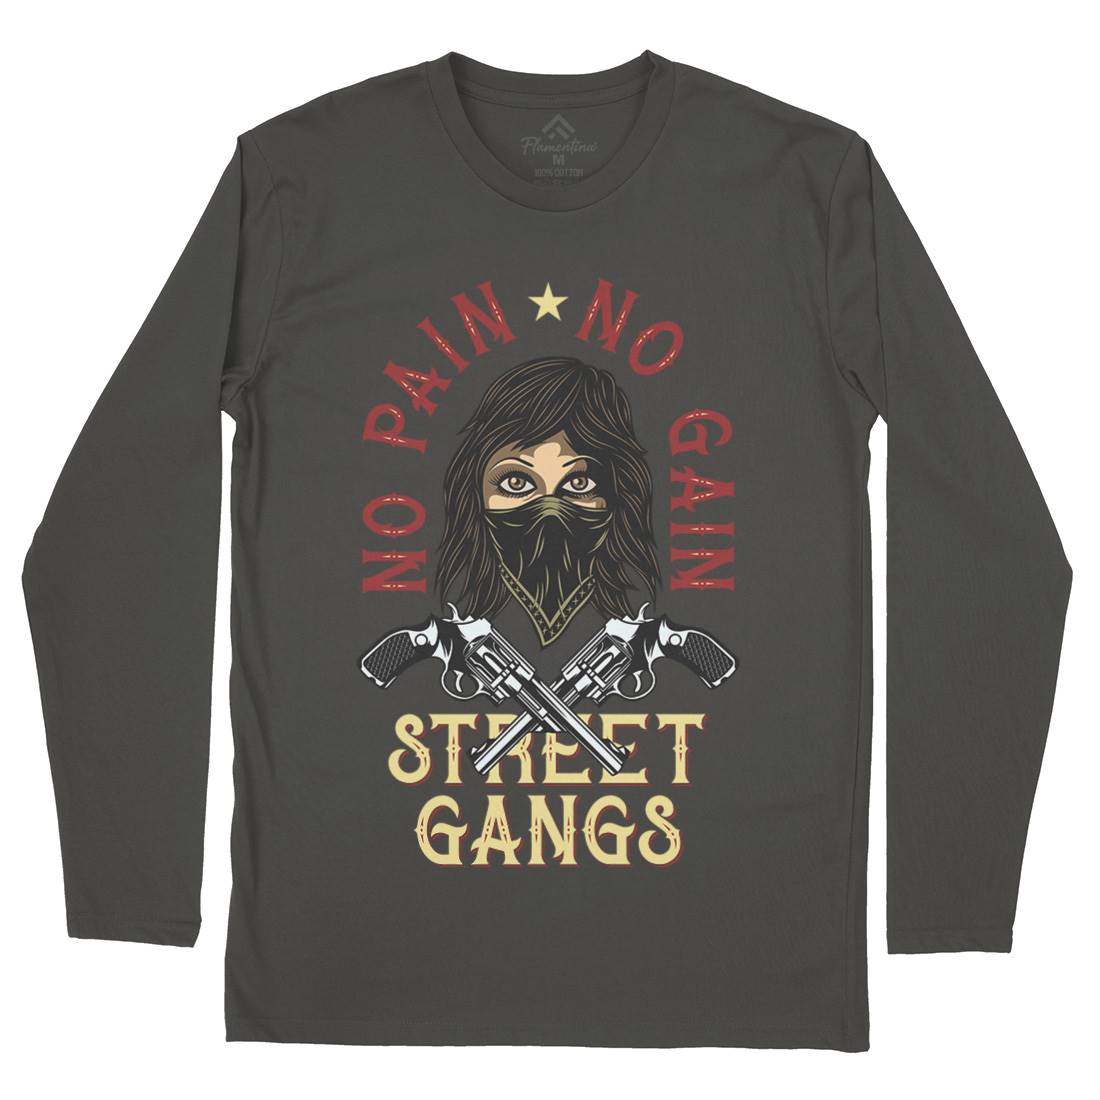 Street Gangs Mens Long Sleeve T-Shirt Retro D986